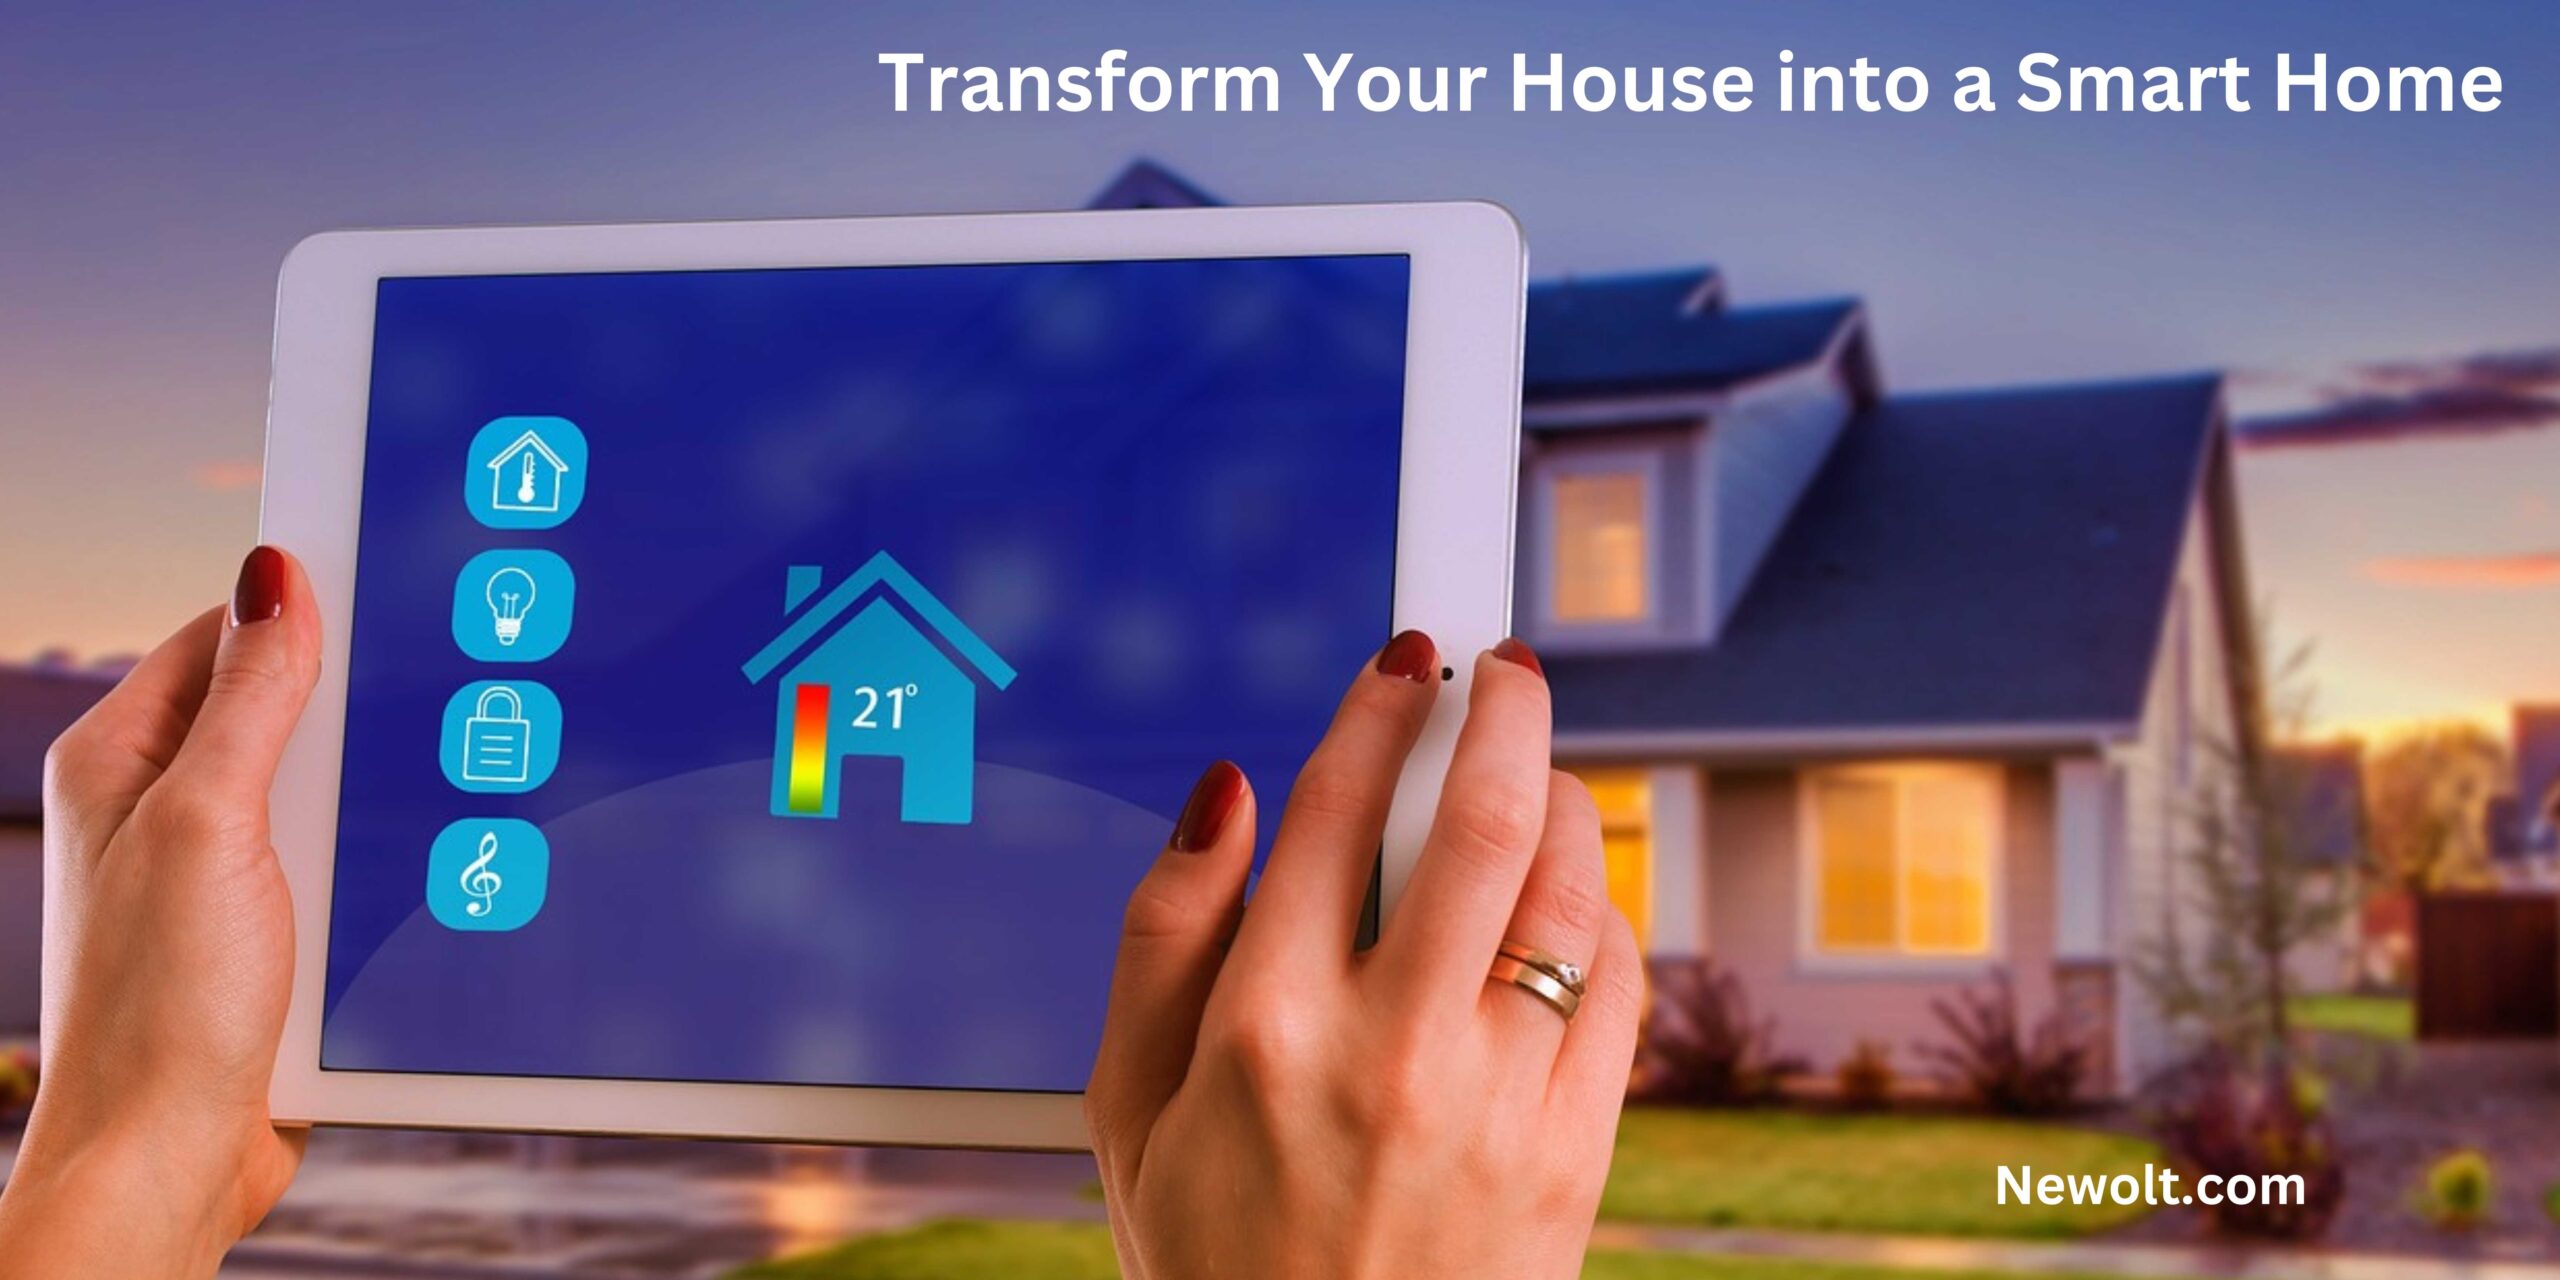 Transform Your House into a Smart Home